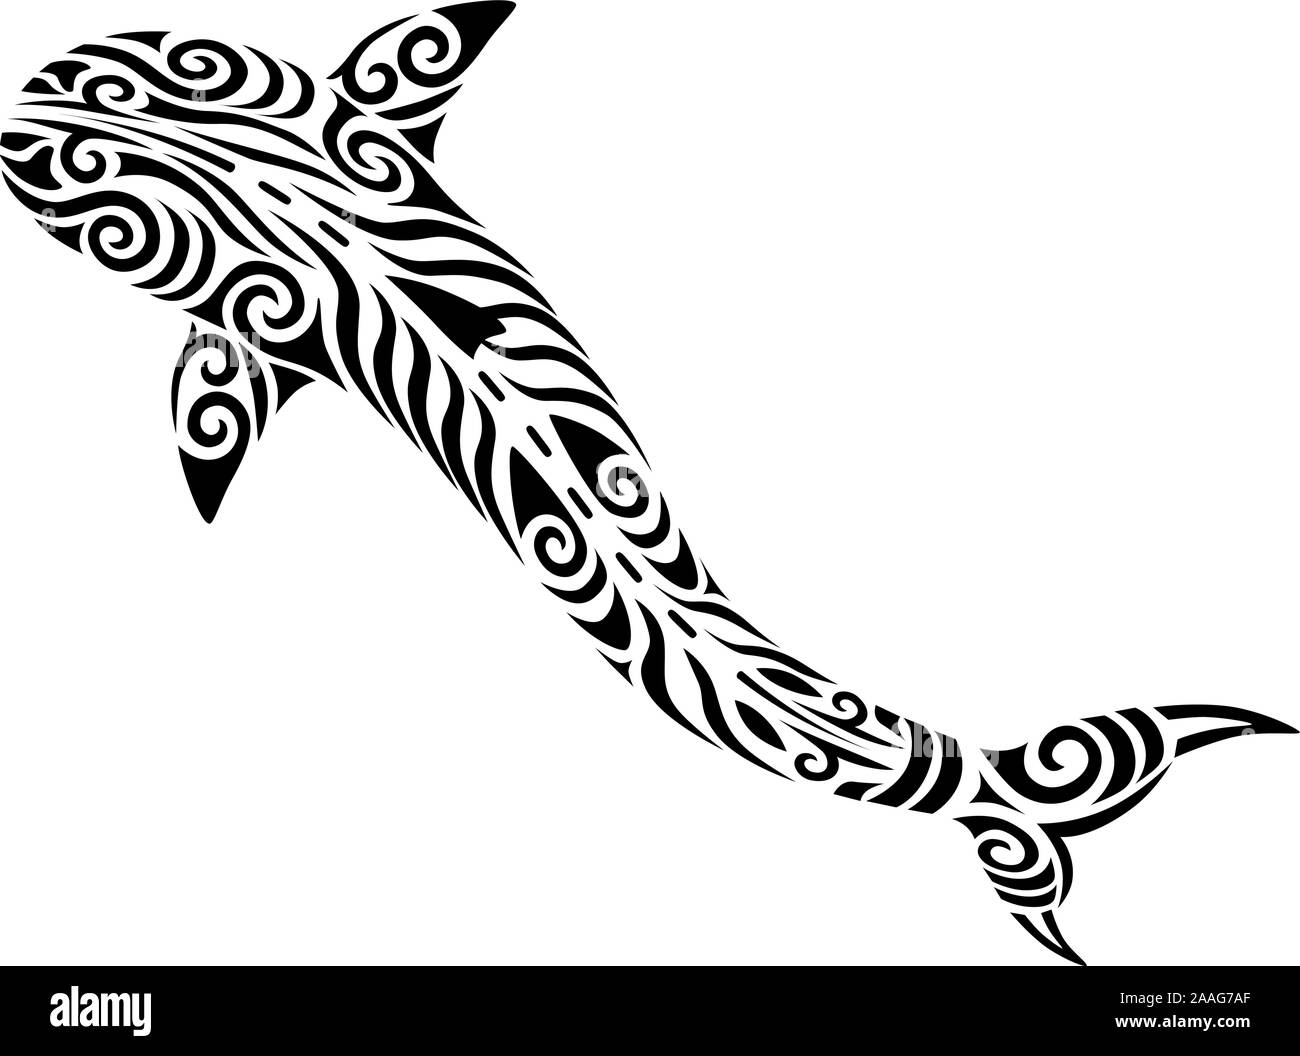 Shark tattoo tribal stylised maori koru design fish ideal for tattoo design - easy color change Stock Vector